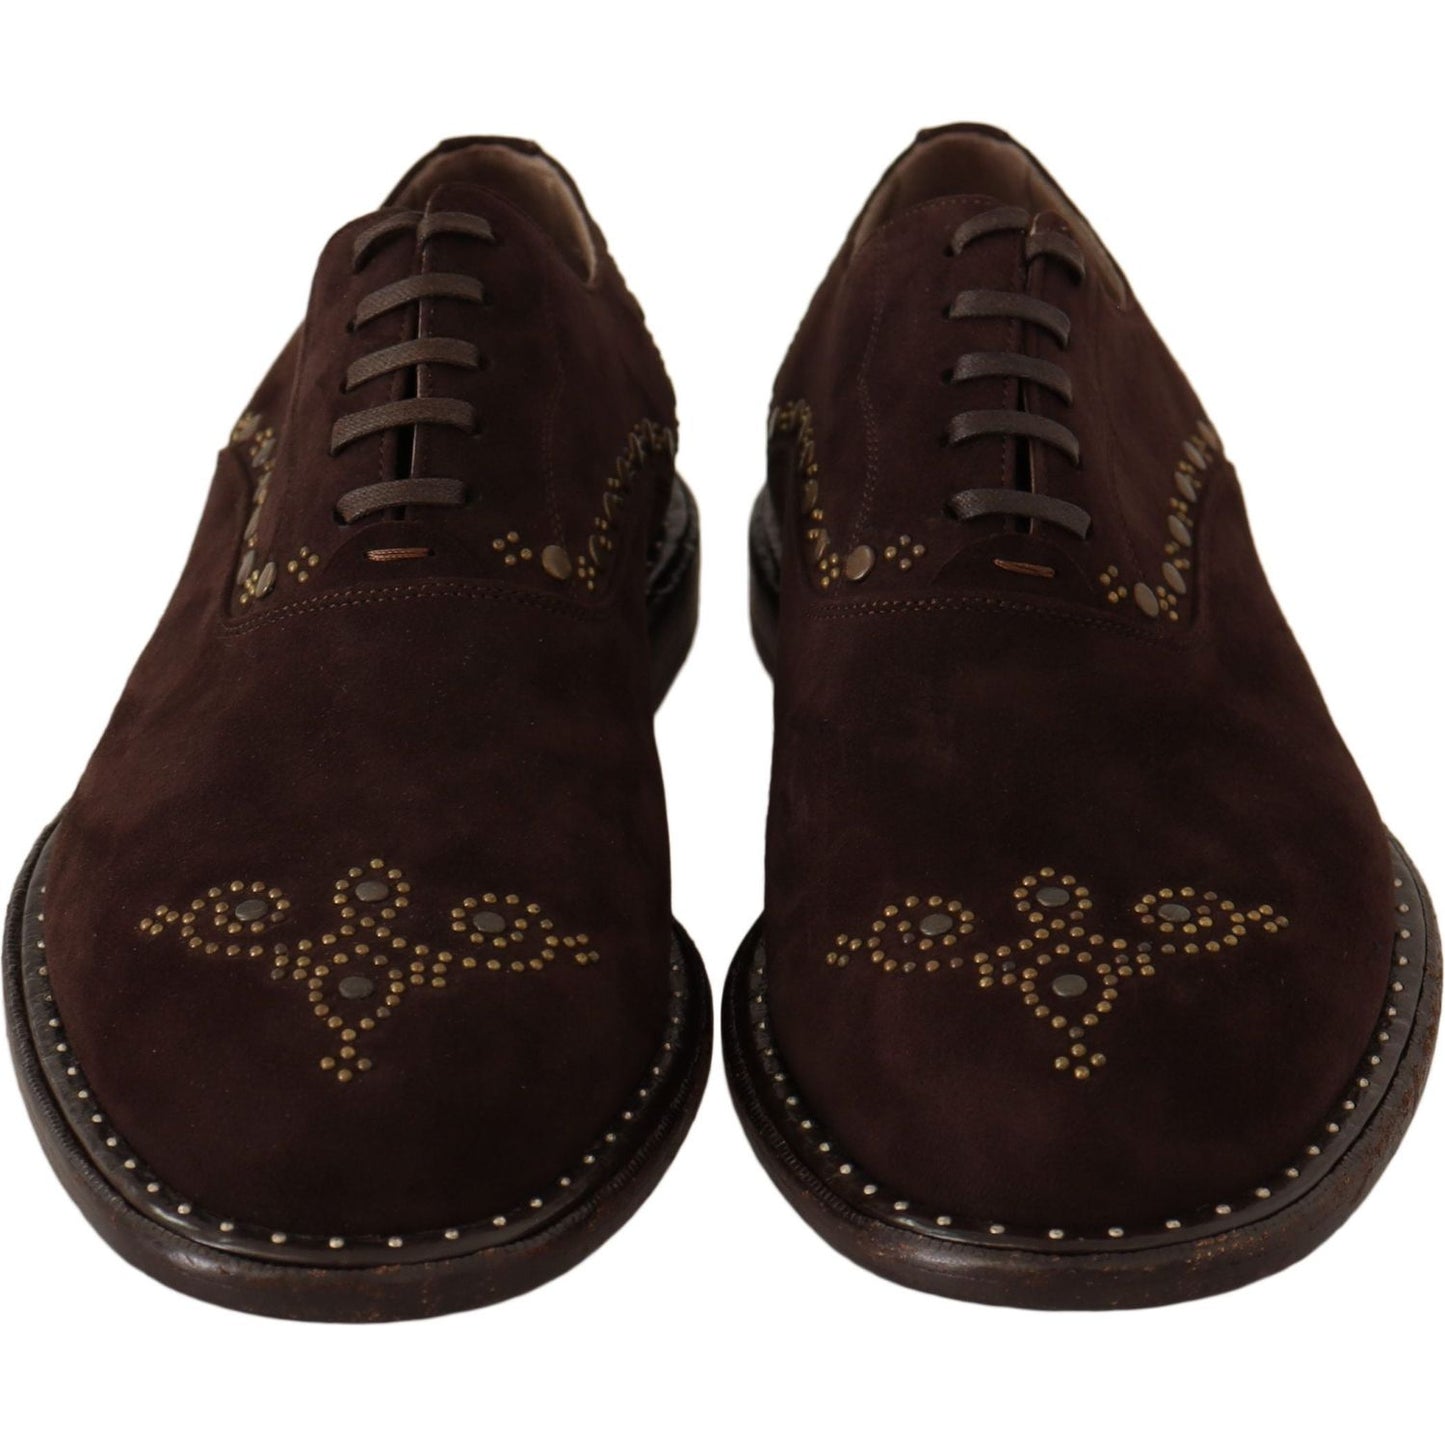 Dolce & Gabbana Elegant Brown Suede Studded Derby Shoes Dress Shoes brown-suede-marsala-derby-studded-shoes IMG_0018-scaled-4abdae0e-ae5.jpg